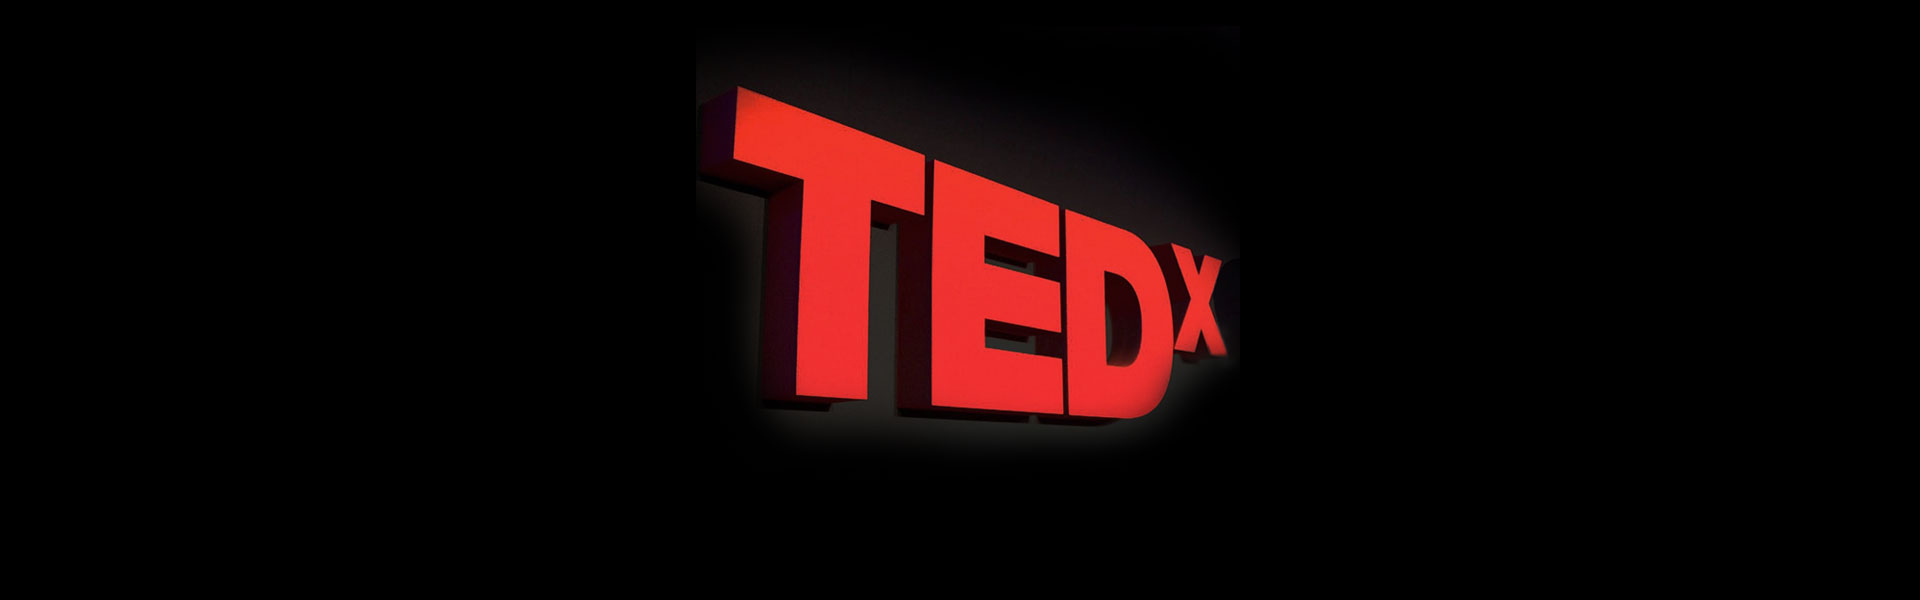 News - TEDx Talk by Trey Ratcliff — John Rowell Photography